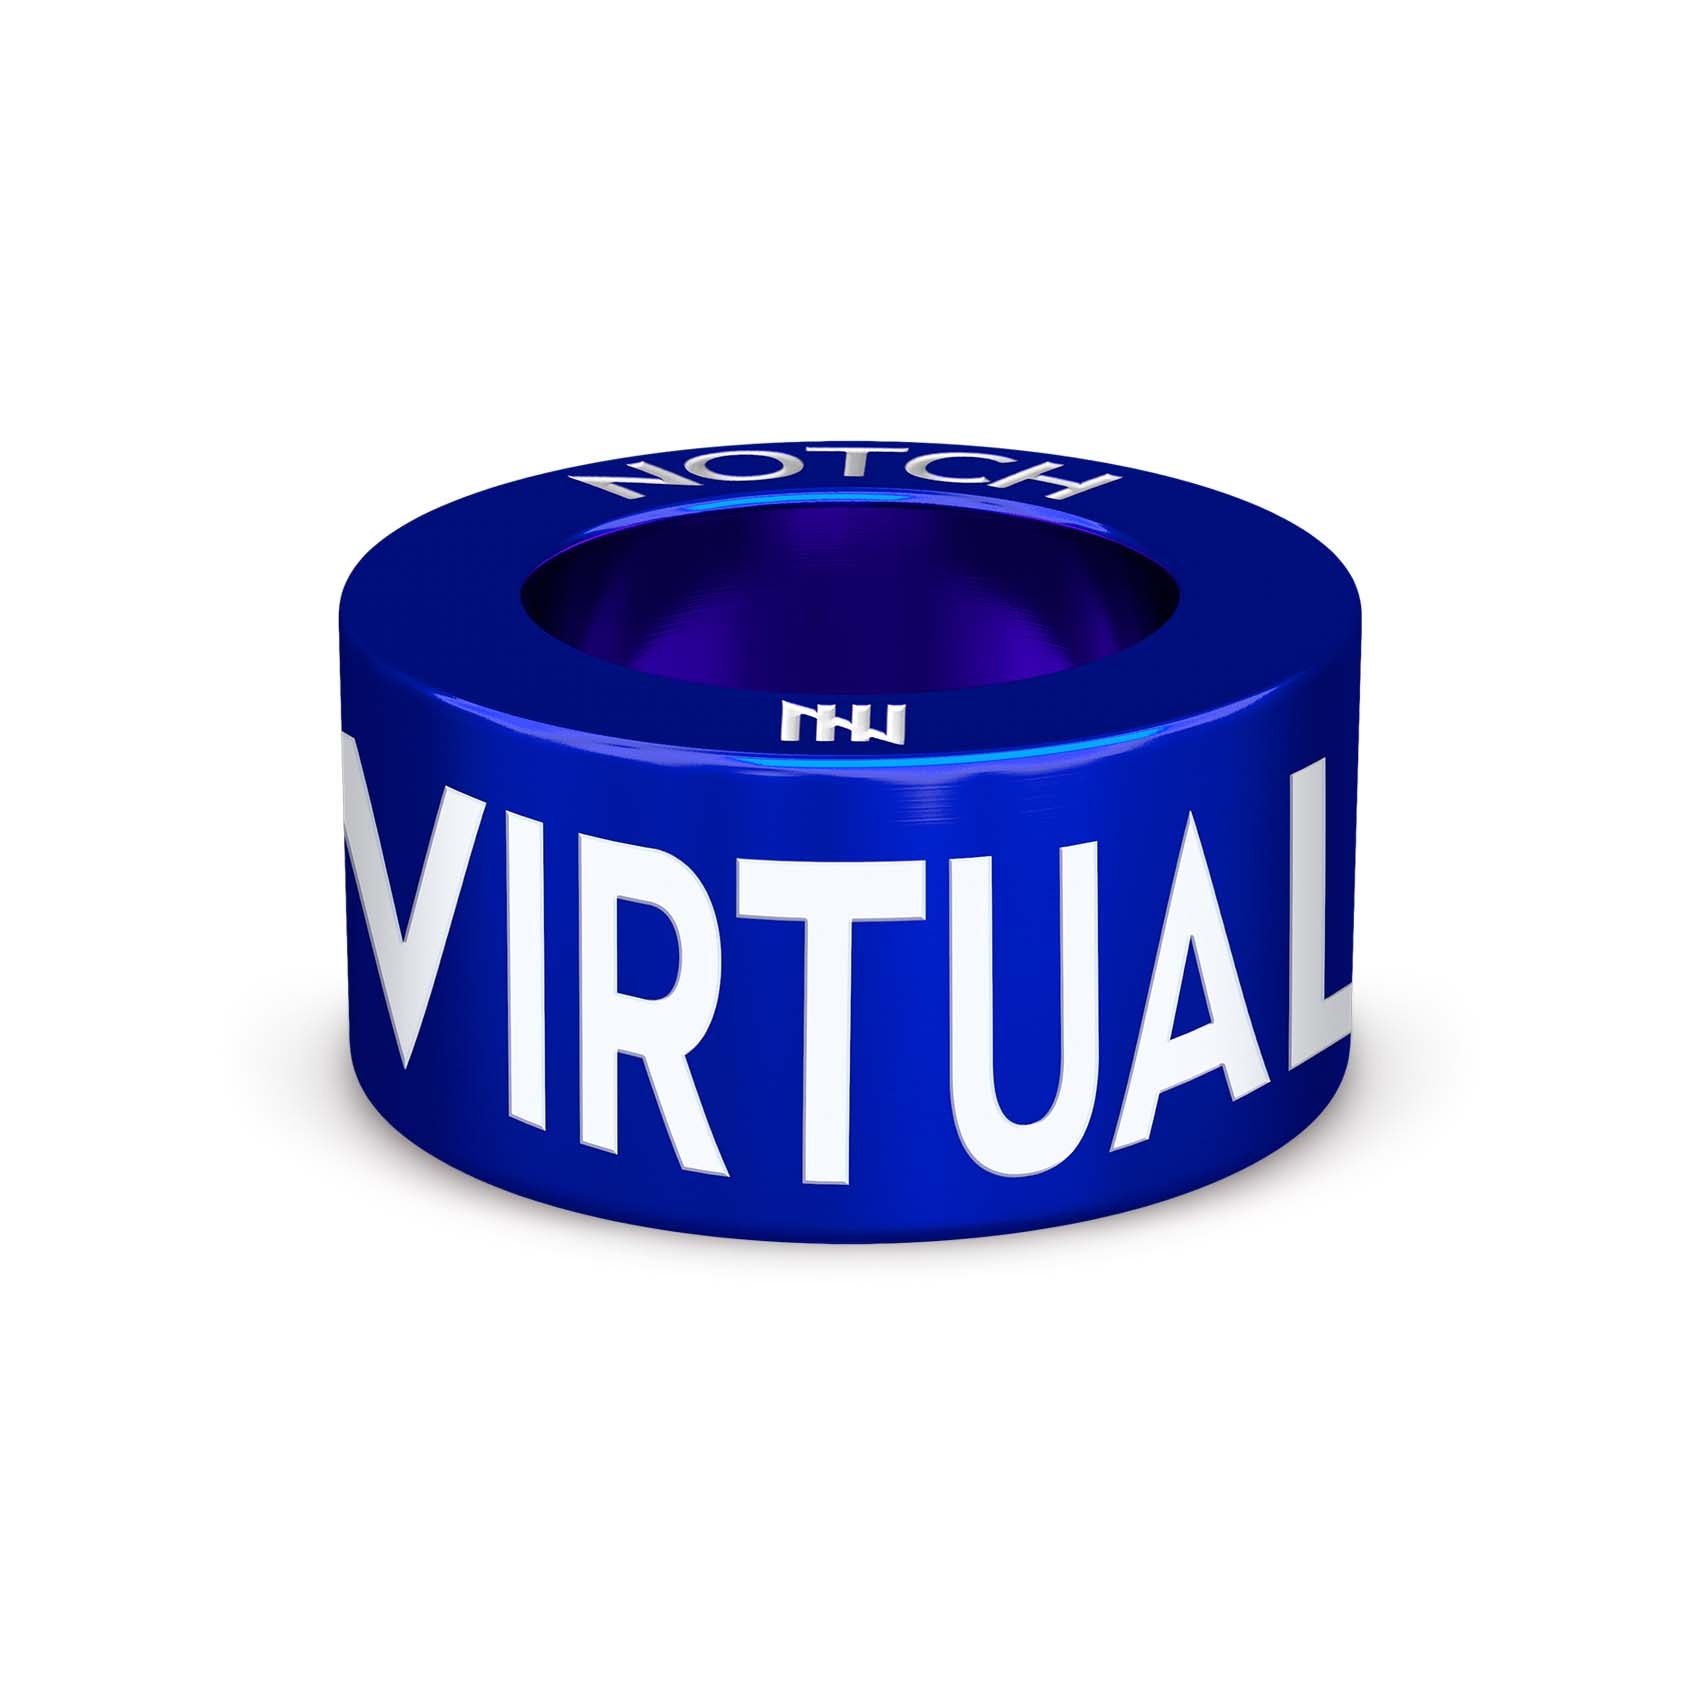 Virtual Runner UK NOTCH Charm